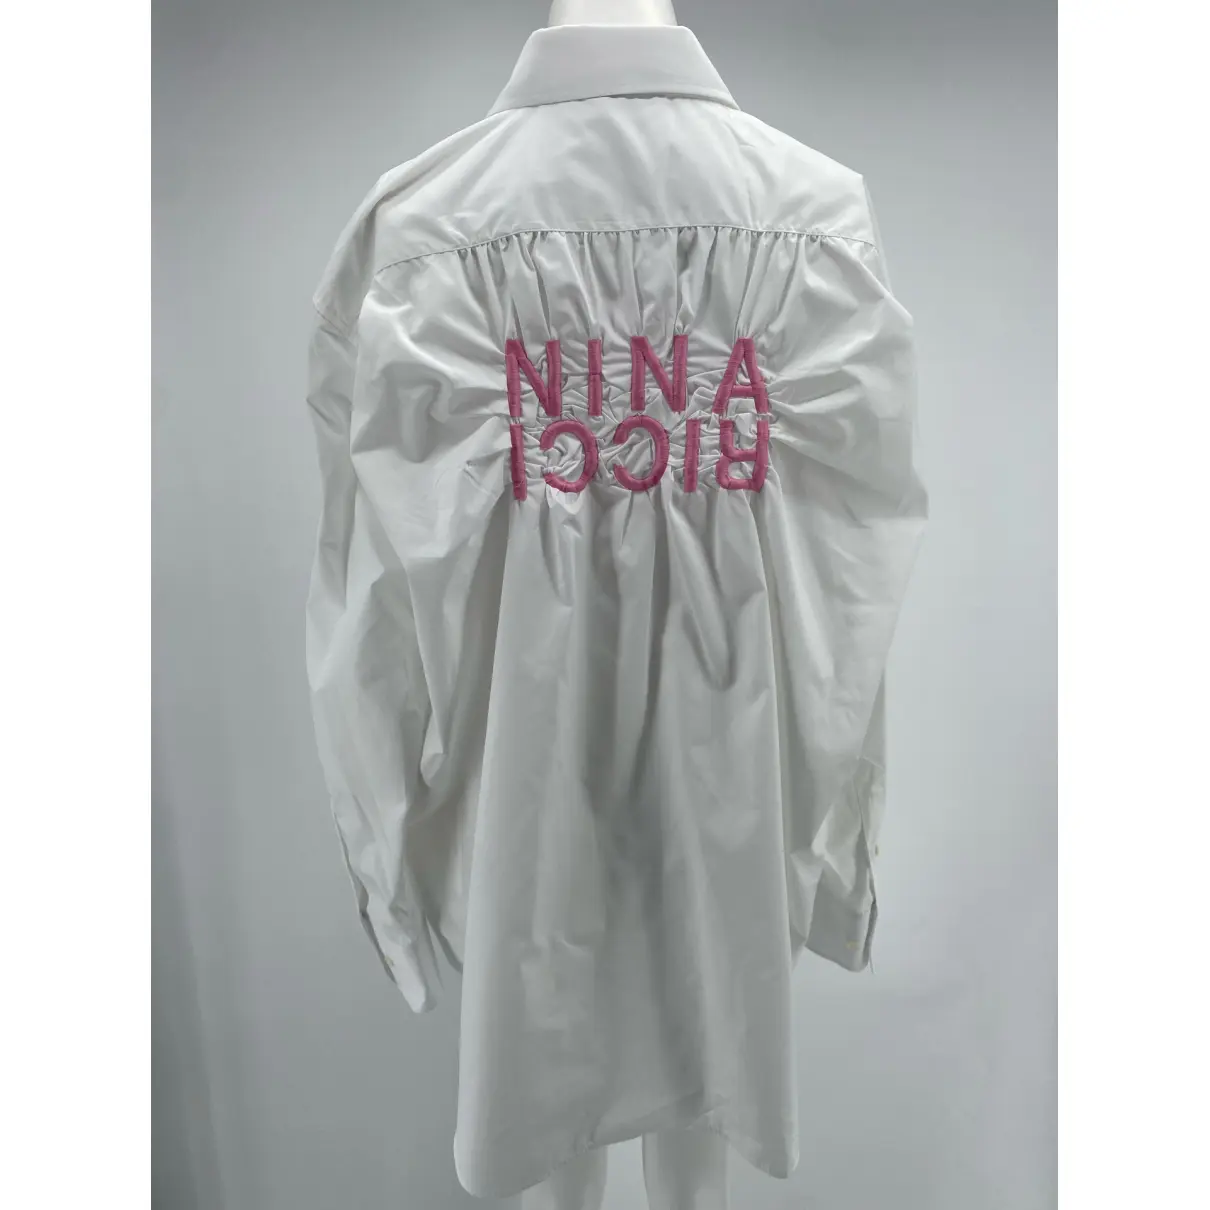 Buy Nina Ricci Shirt online